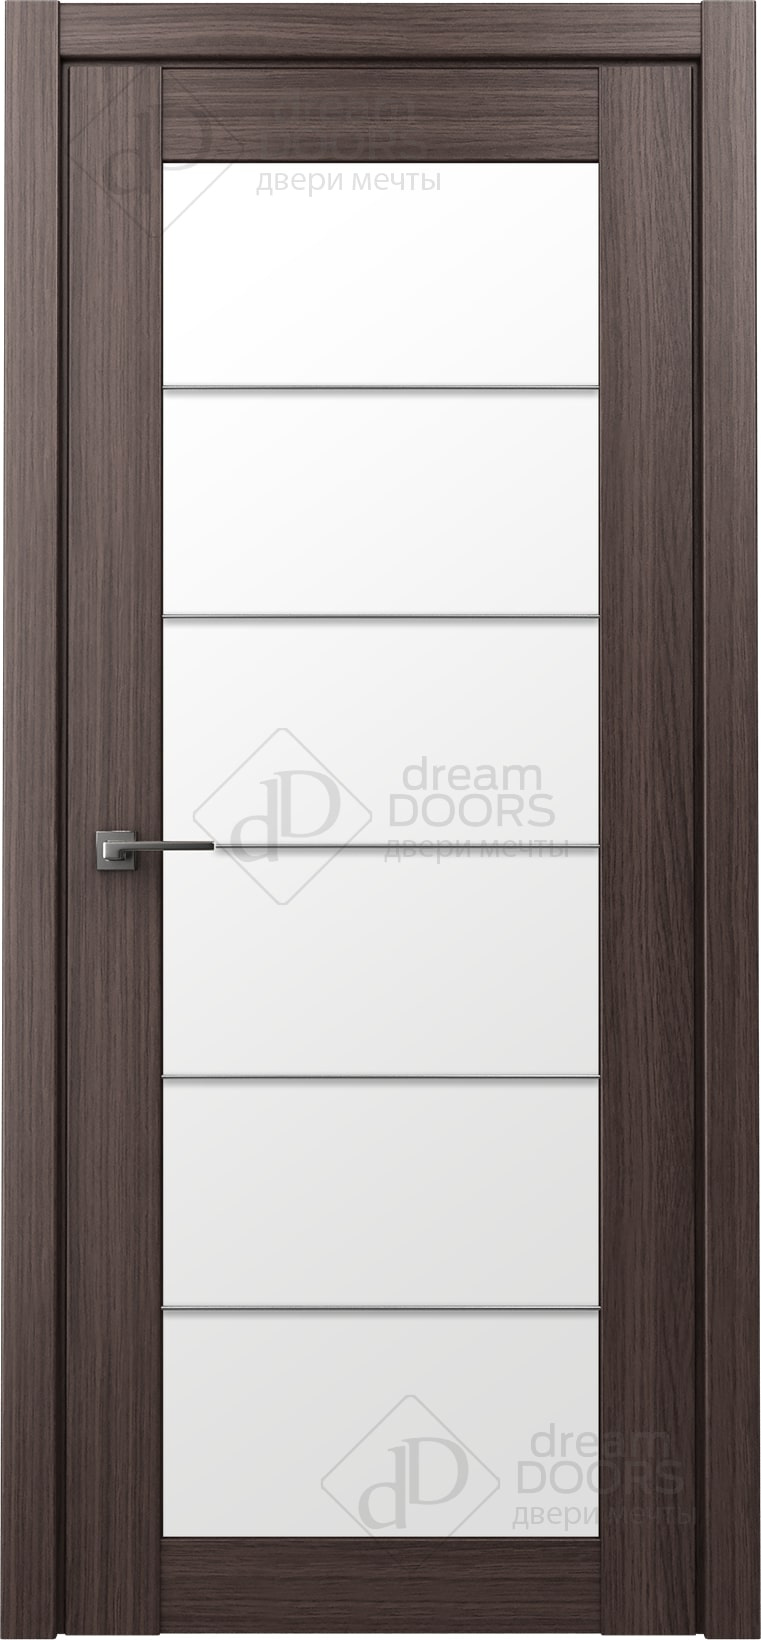 Dream Doors Межкомнатная дверь Престиж с молдингом ПО, арт. 16437 - фото №10